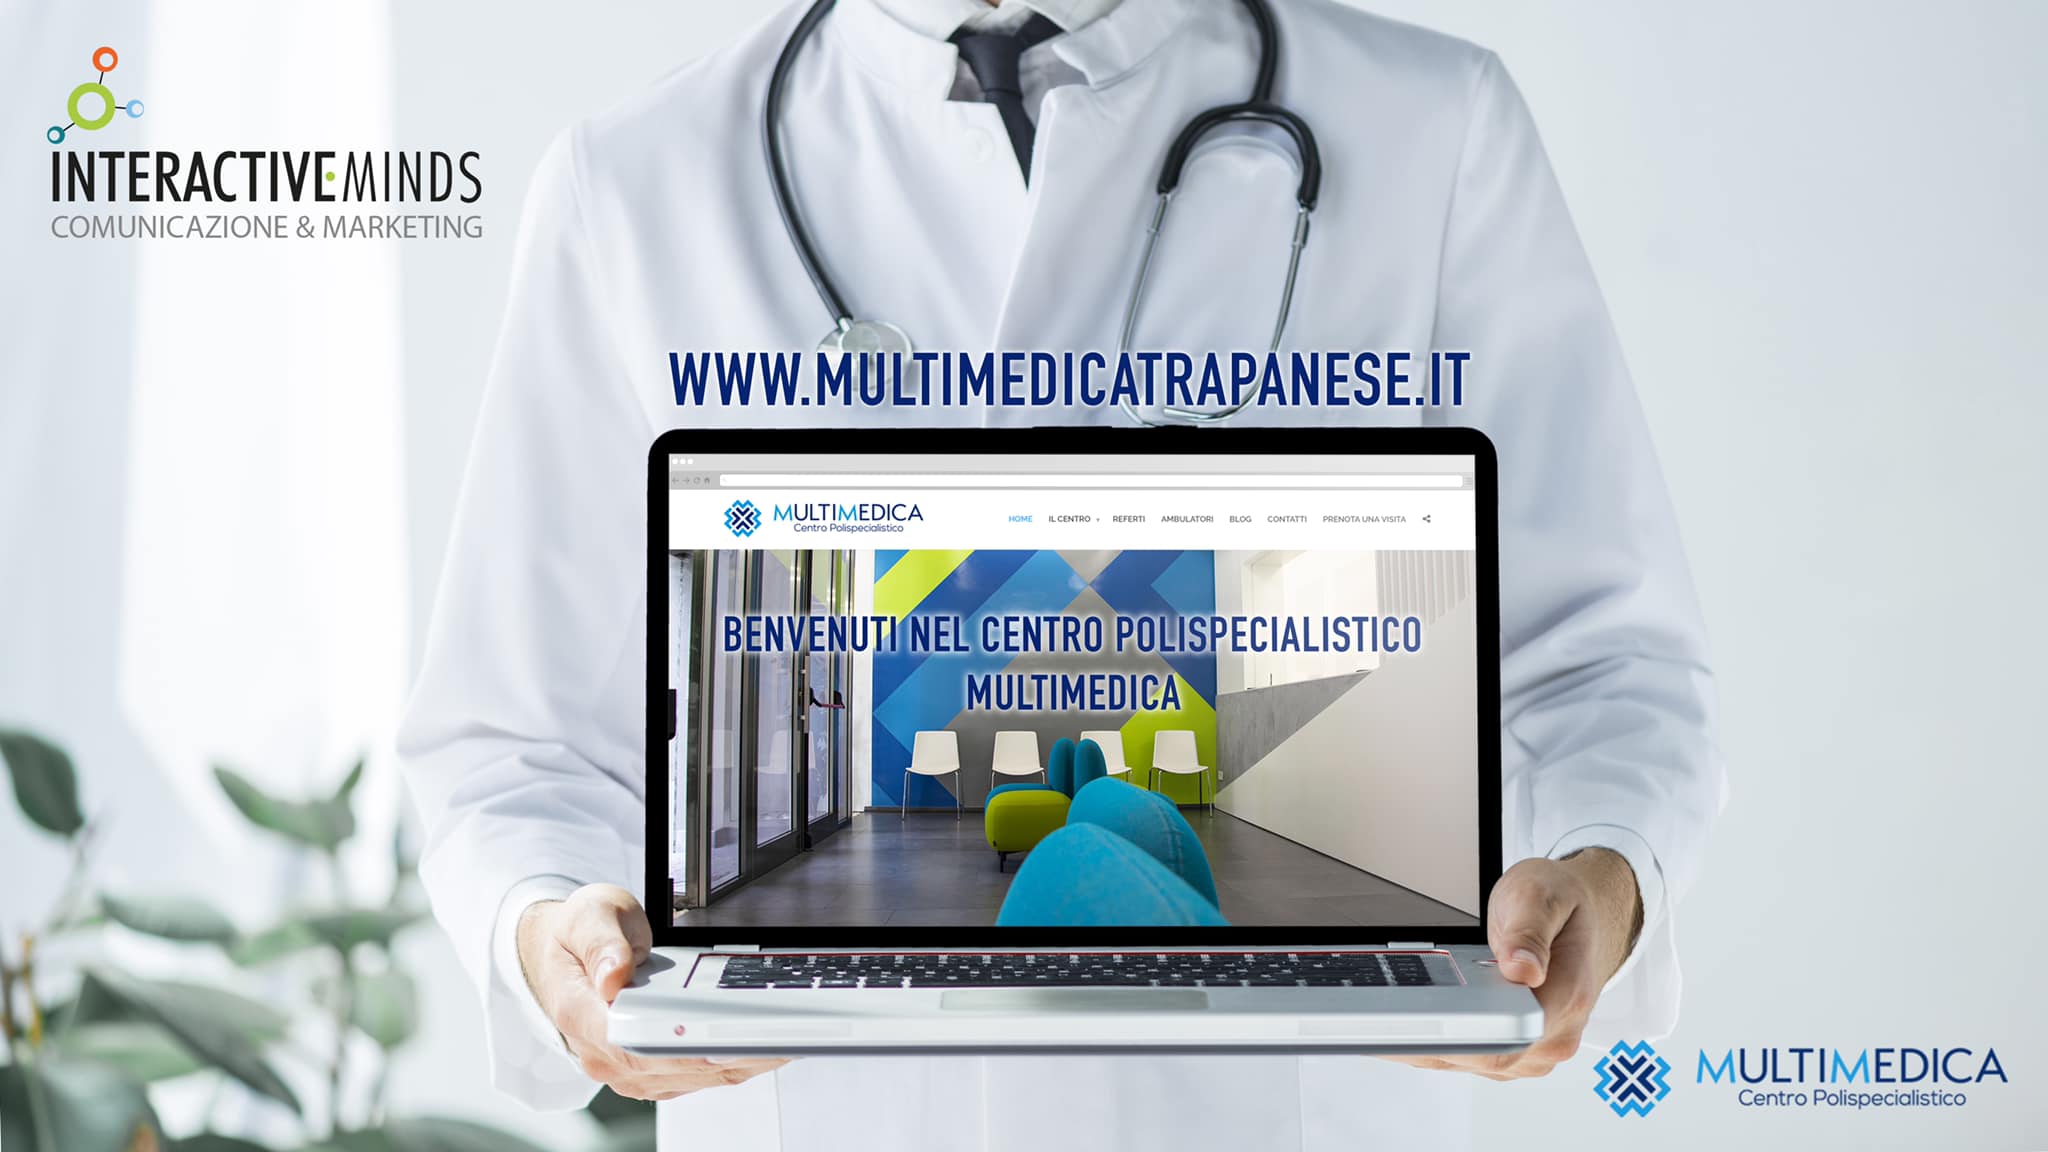 Interactive Minds - portfolio - Multimedica Trapanese